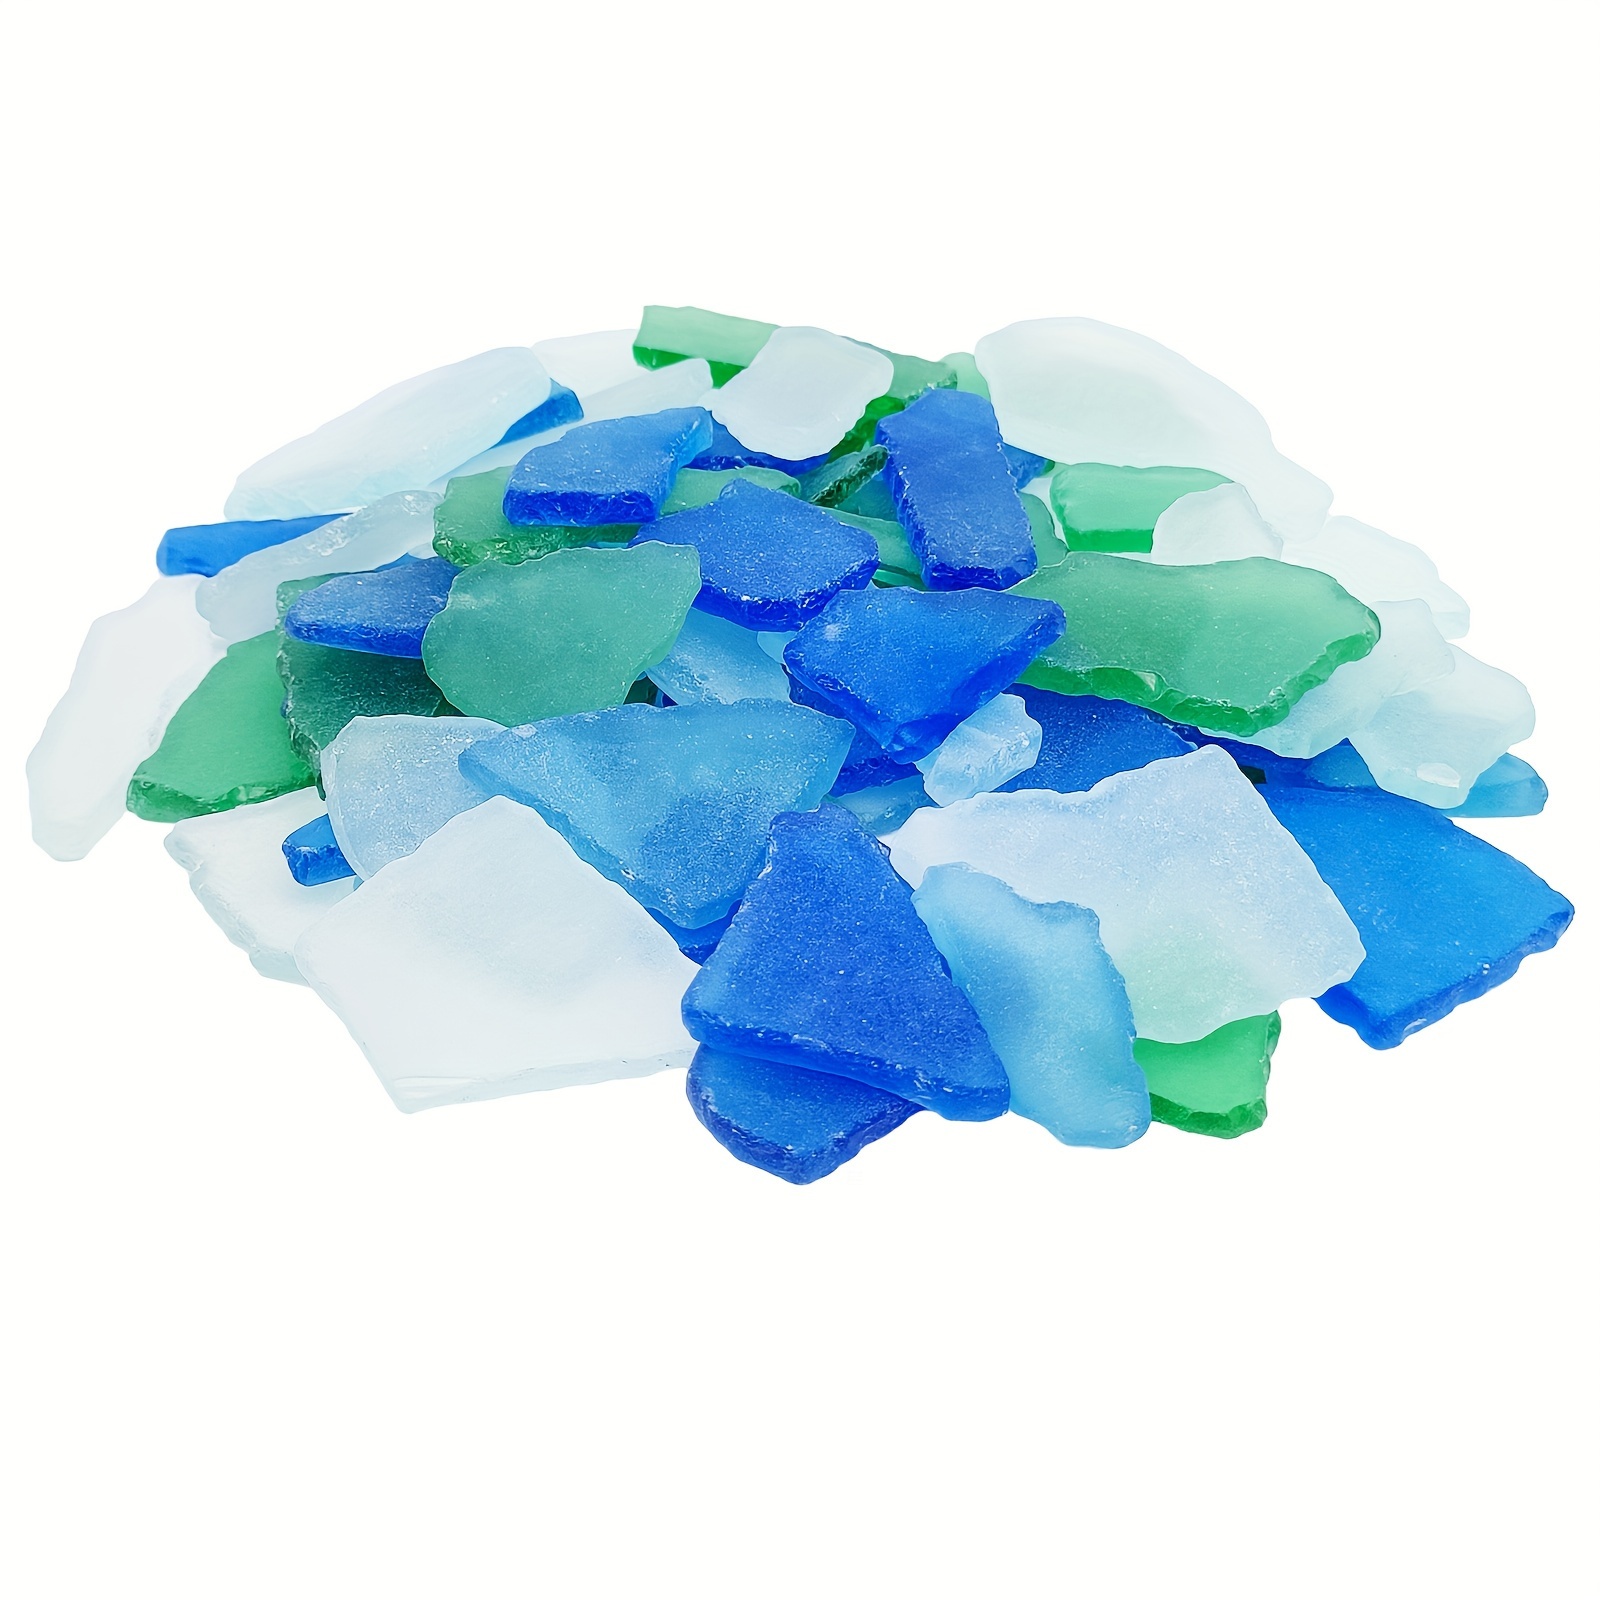  Sea Glass for Crafts - 16oz Versatile Decorative Frosted  Seaglass Pieces - Vase Filler, DIY Art Craft Supplies - Beach Weddings,  Home Decor, Aquariums Decor (Green/Aquamarine/White) : Home & Kitchen